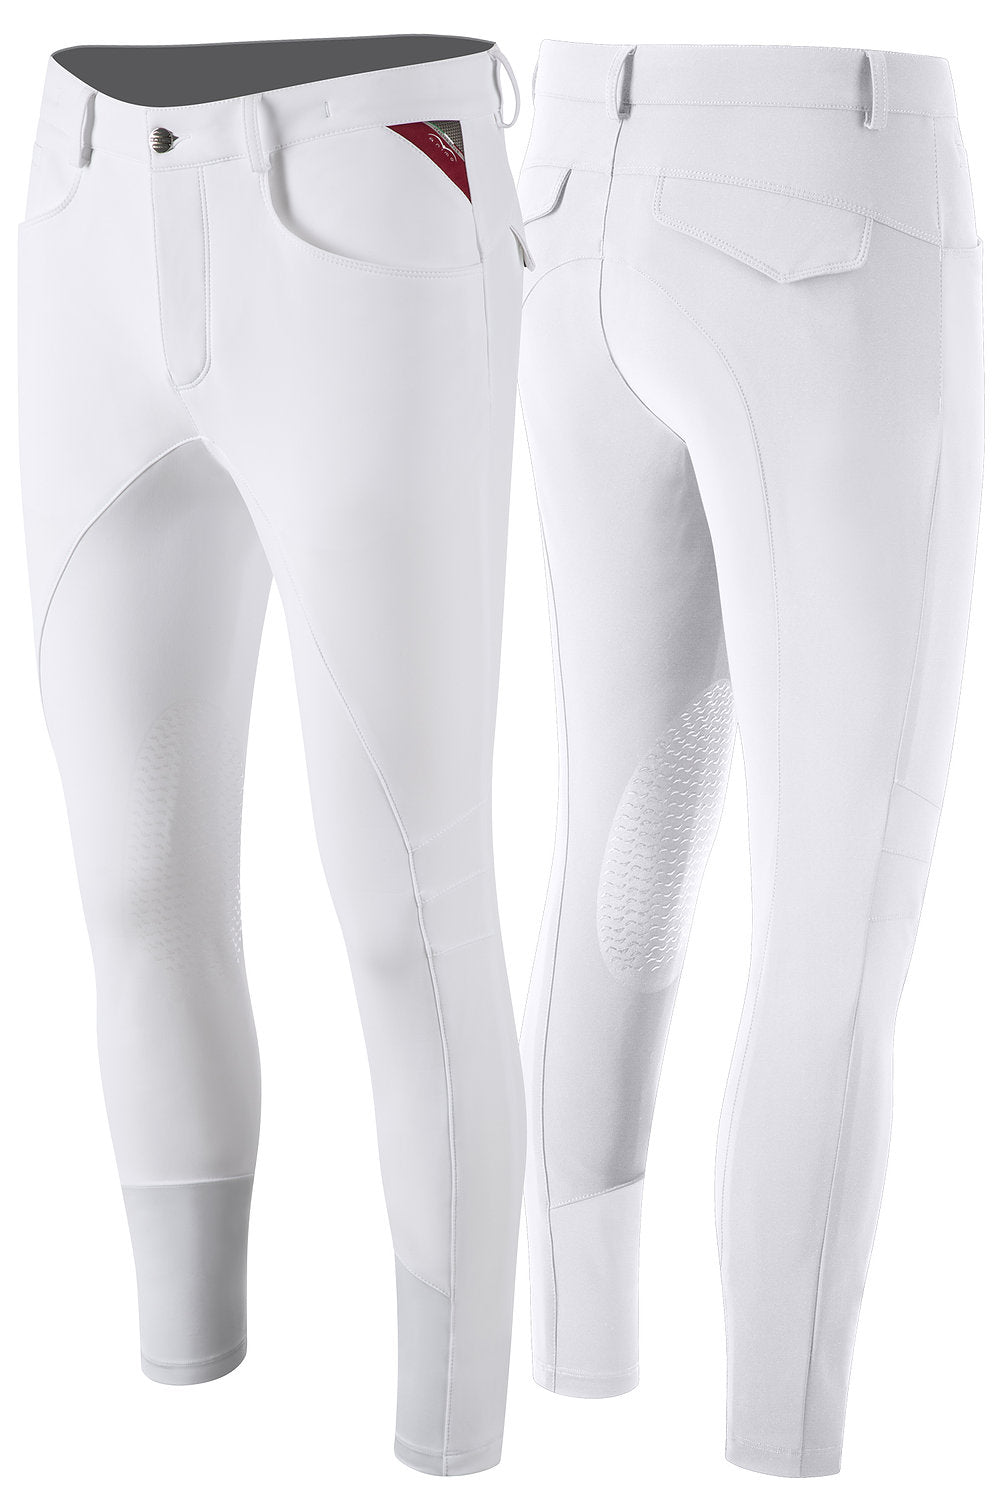 Pantalone Animo modello Metrik bianco uomo